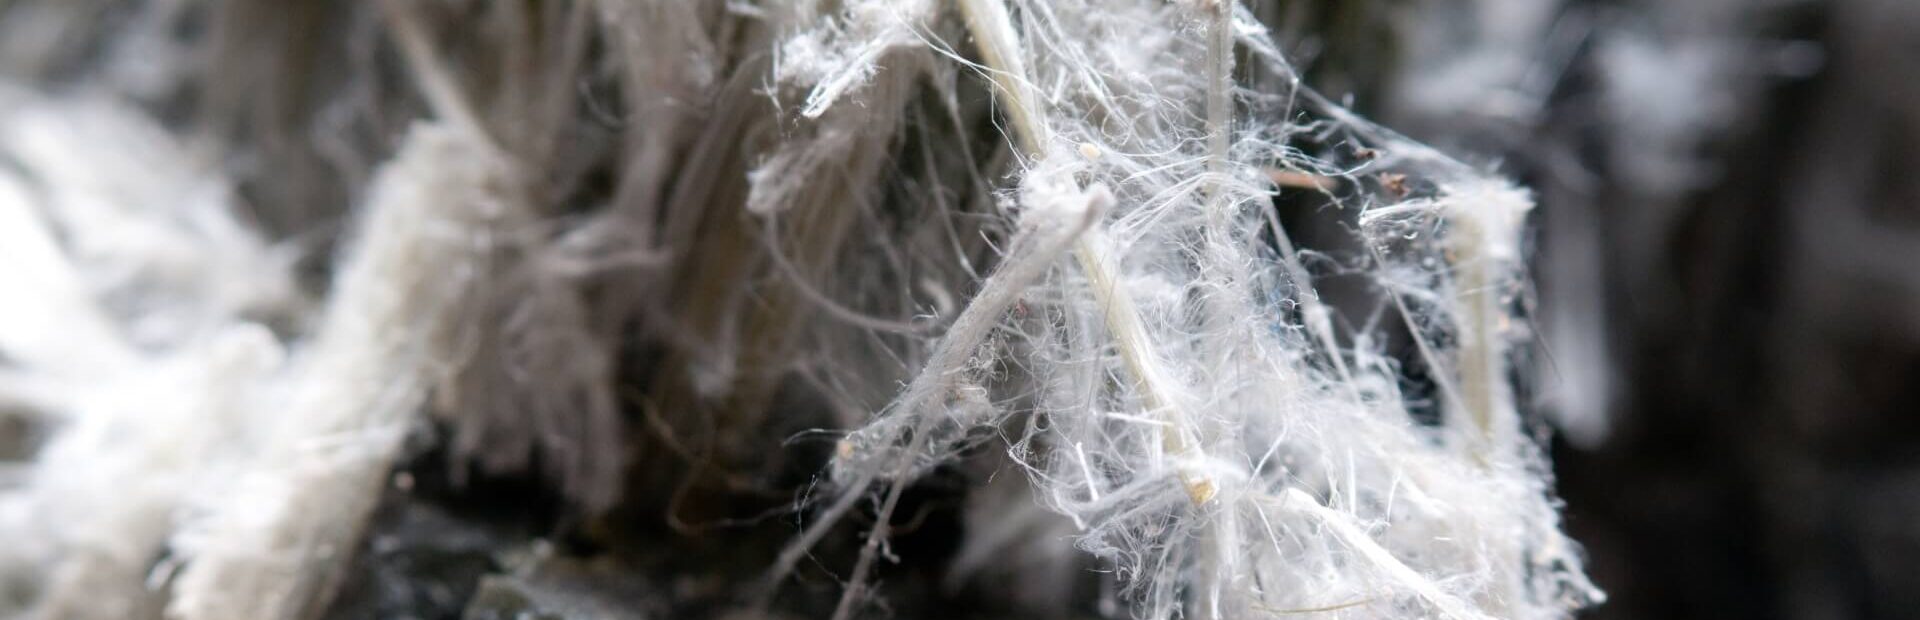 Magnified asbestos fibers